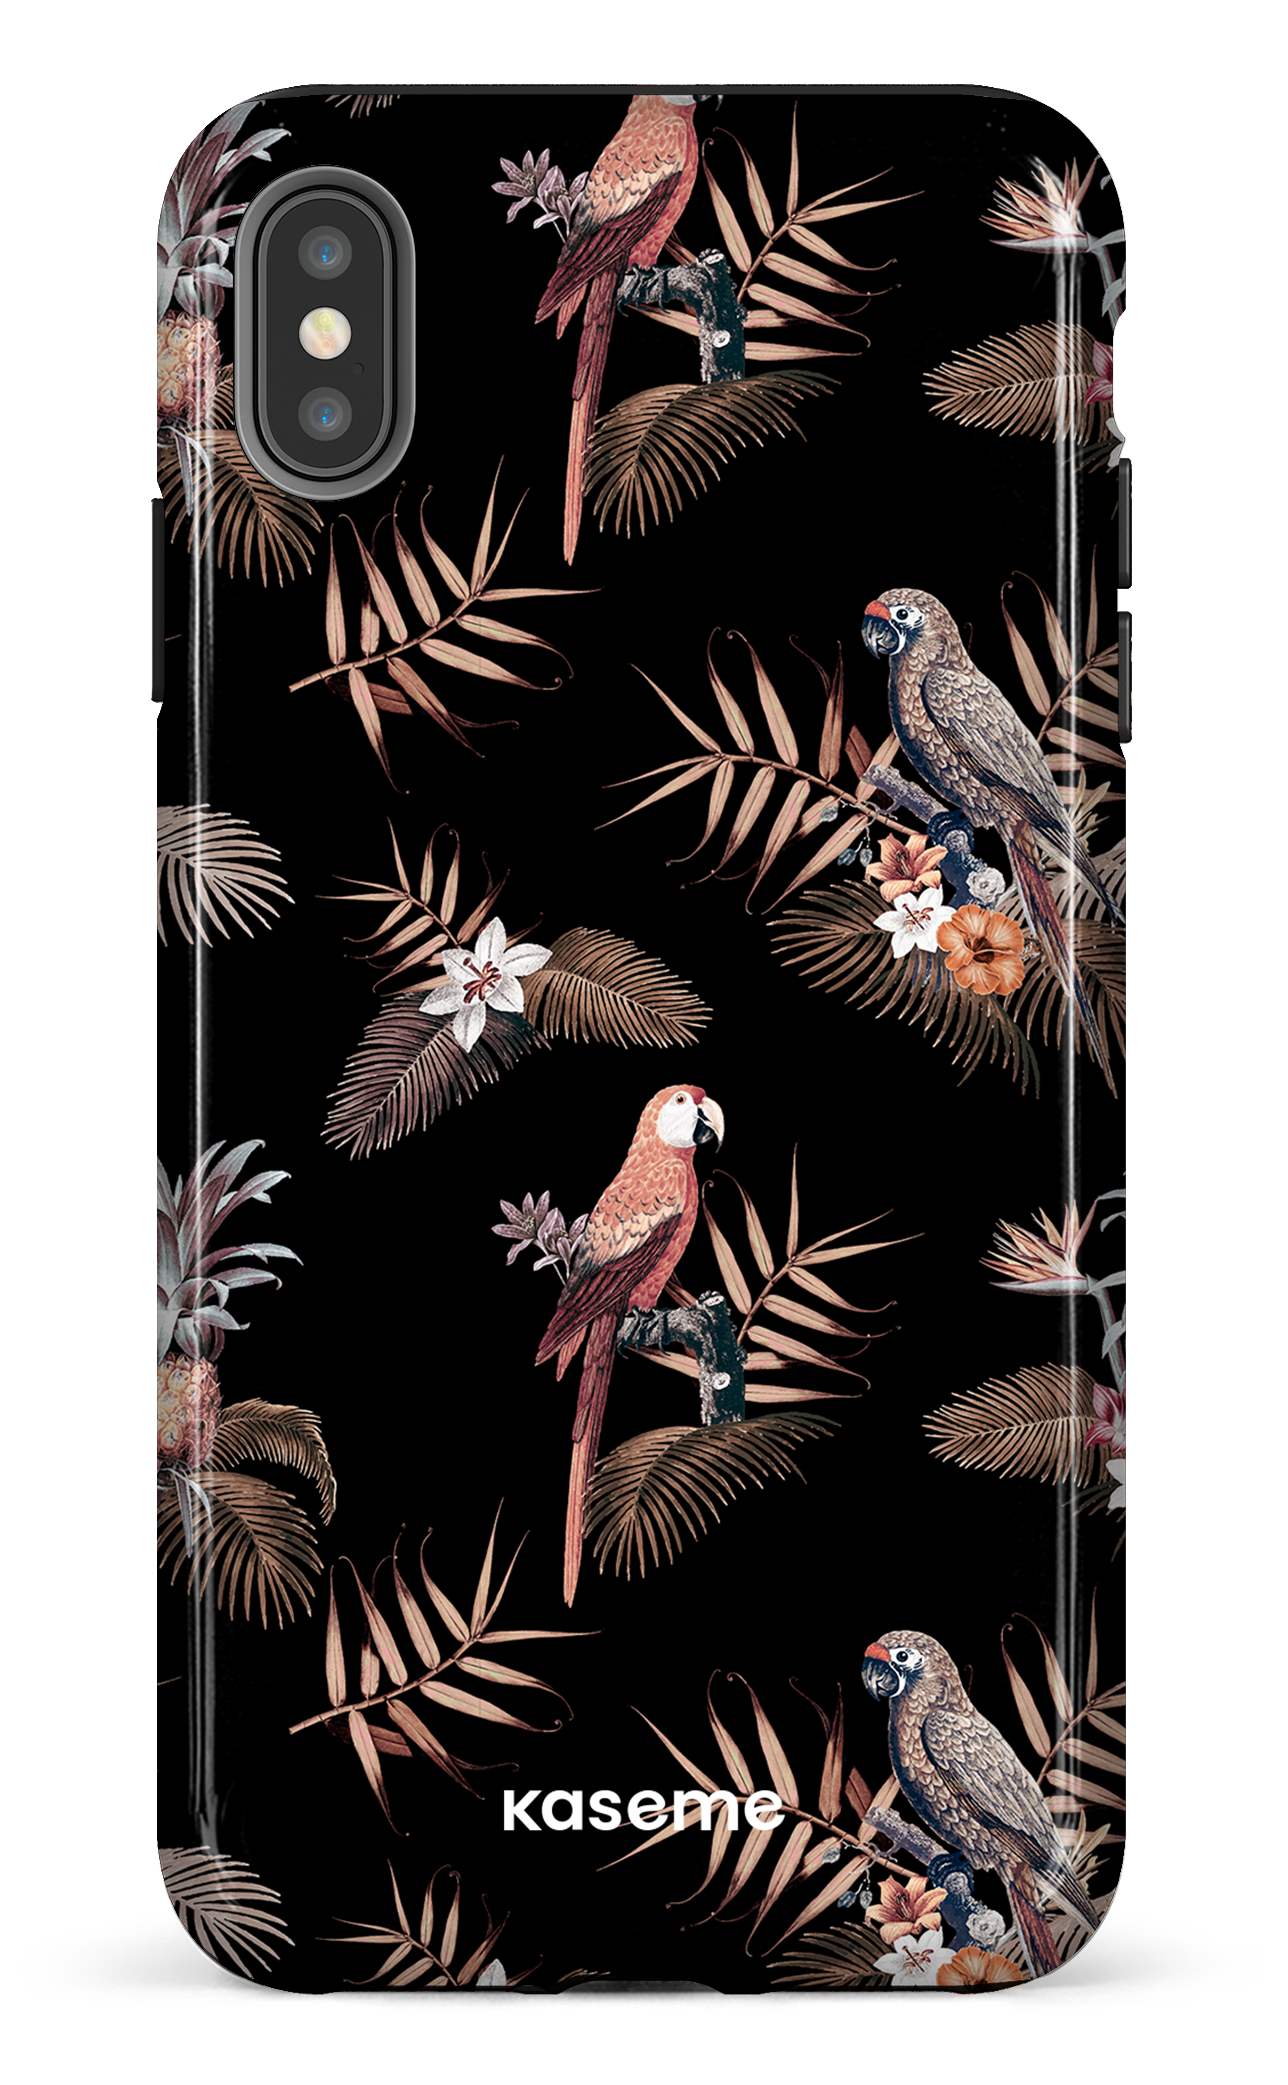 Rainforest - iPhone XS Max